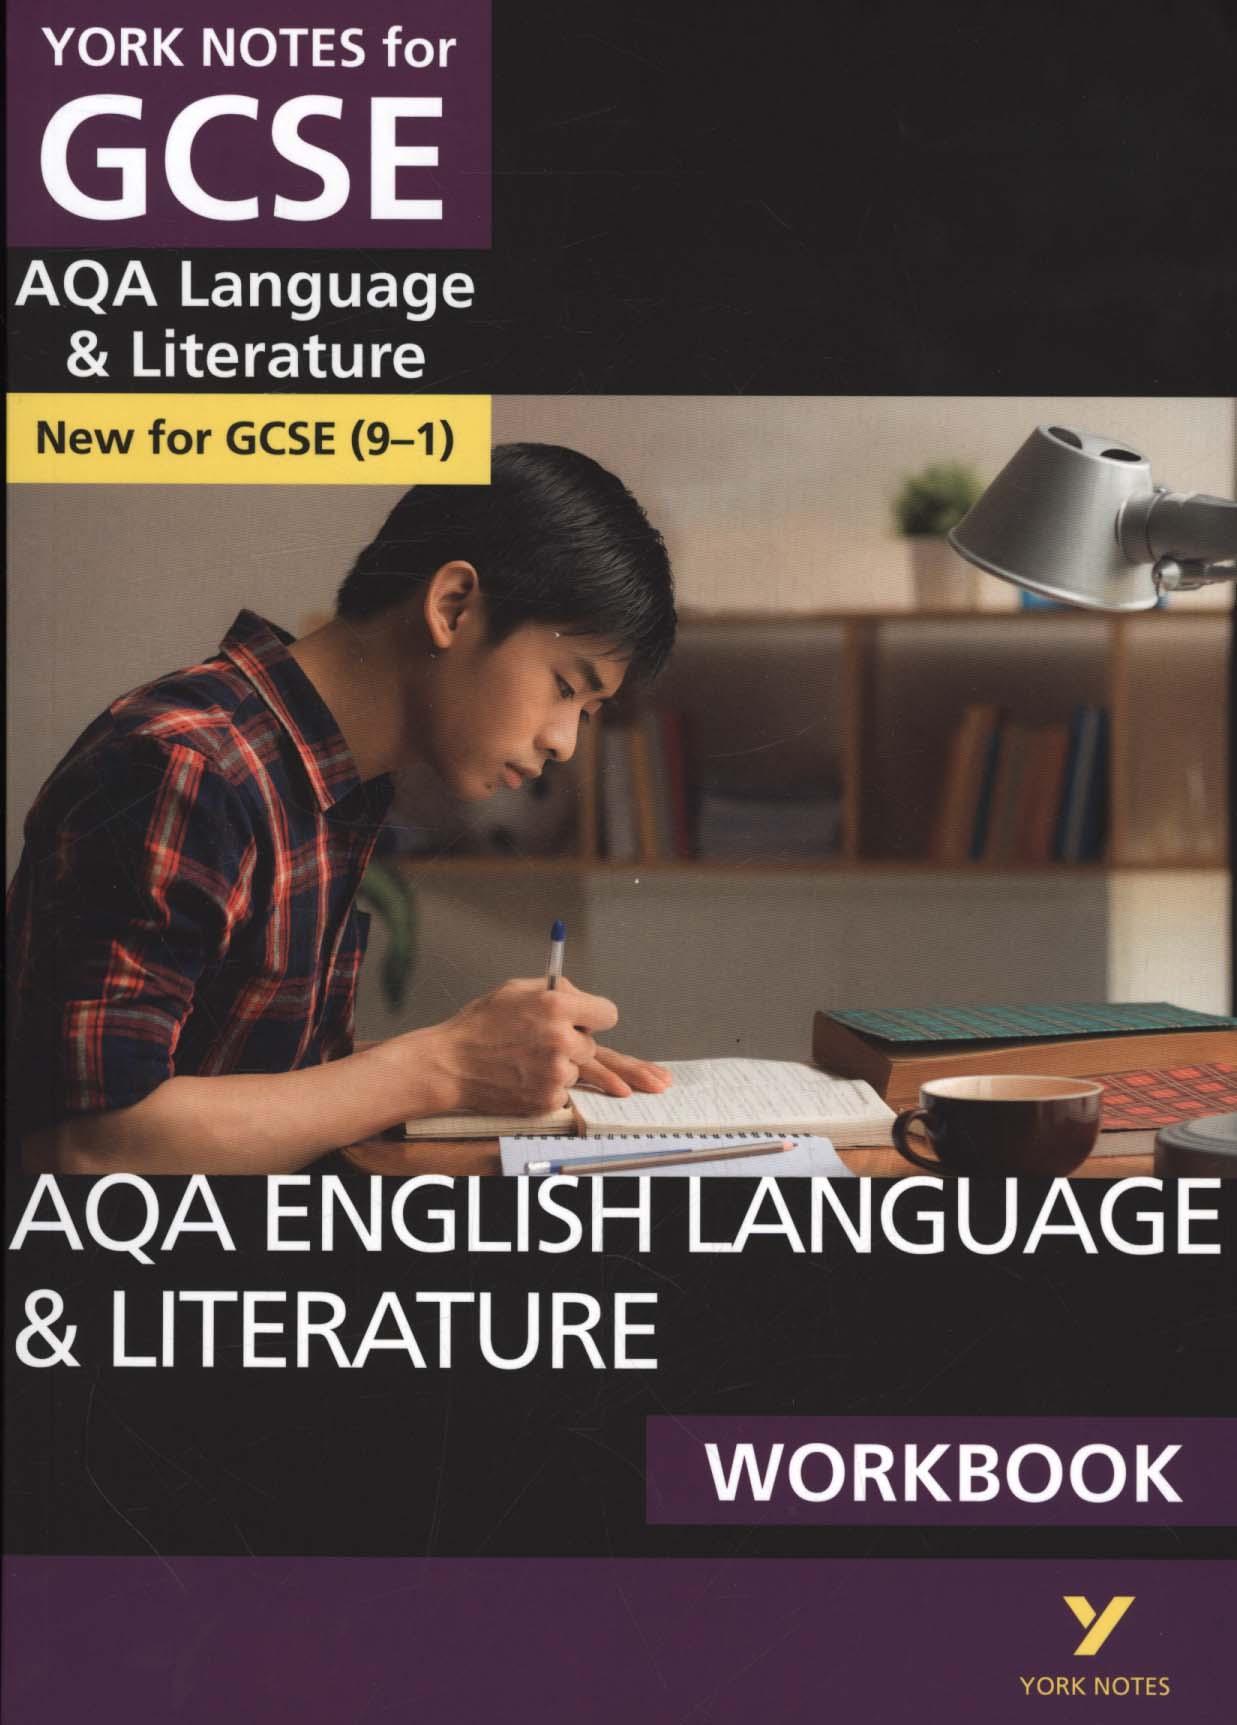 AQA English Language and Literature Workbook: York Notes for